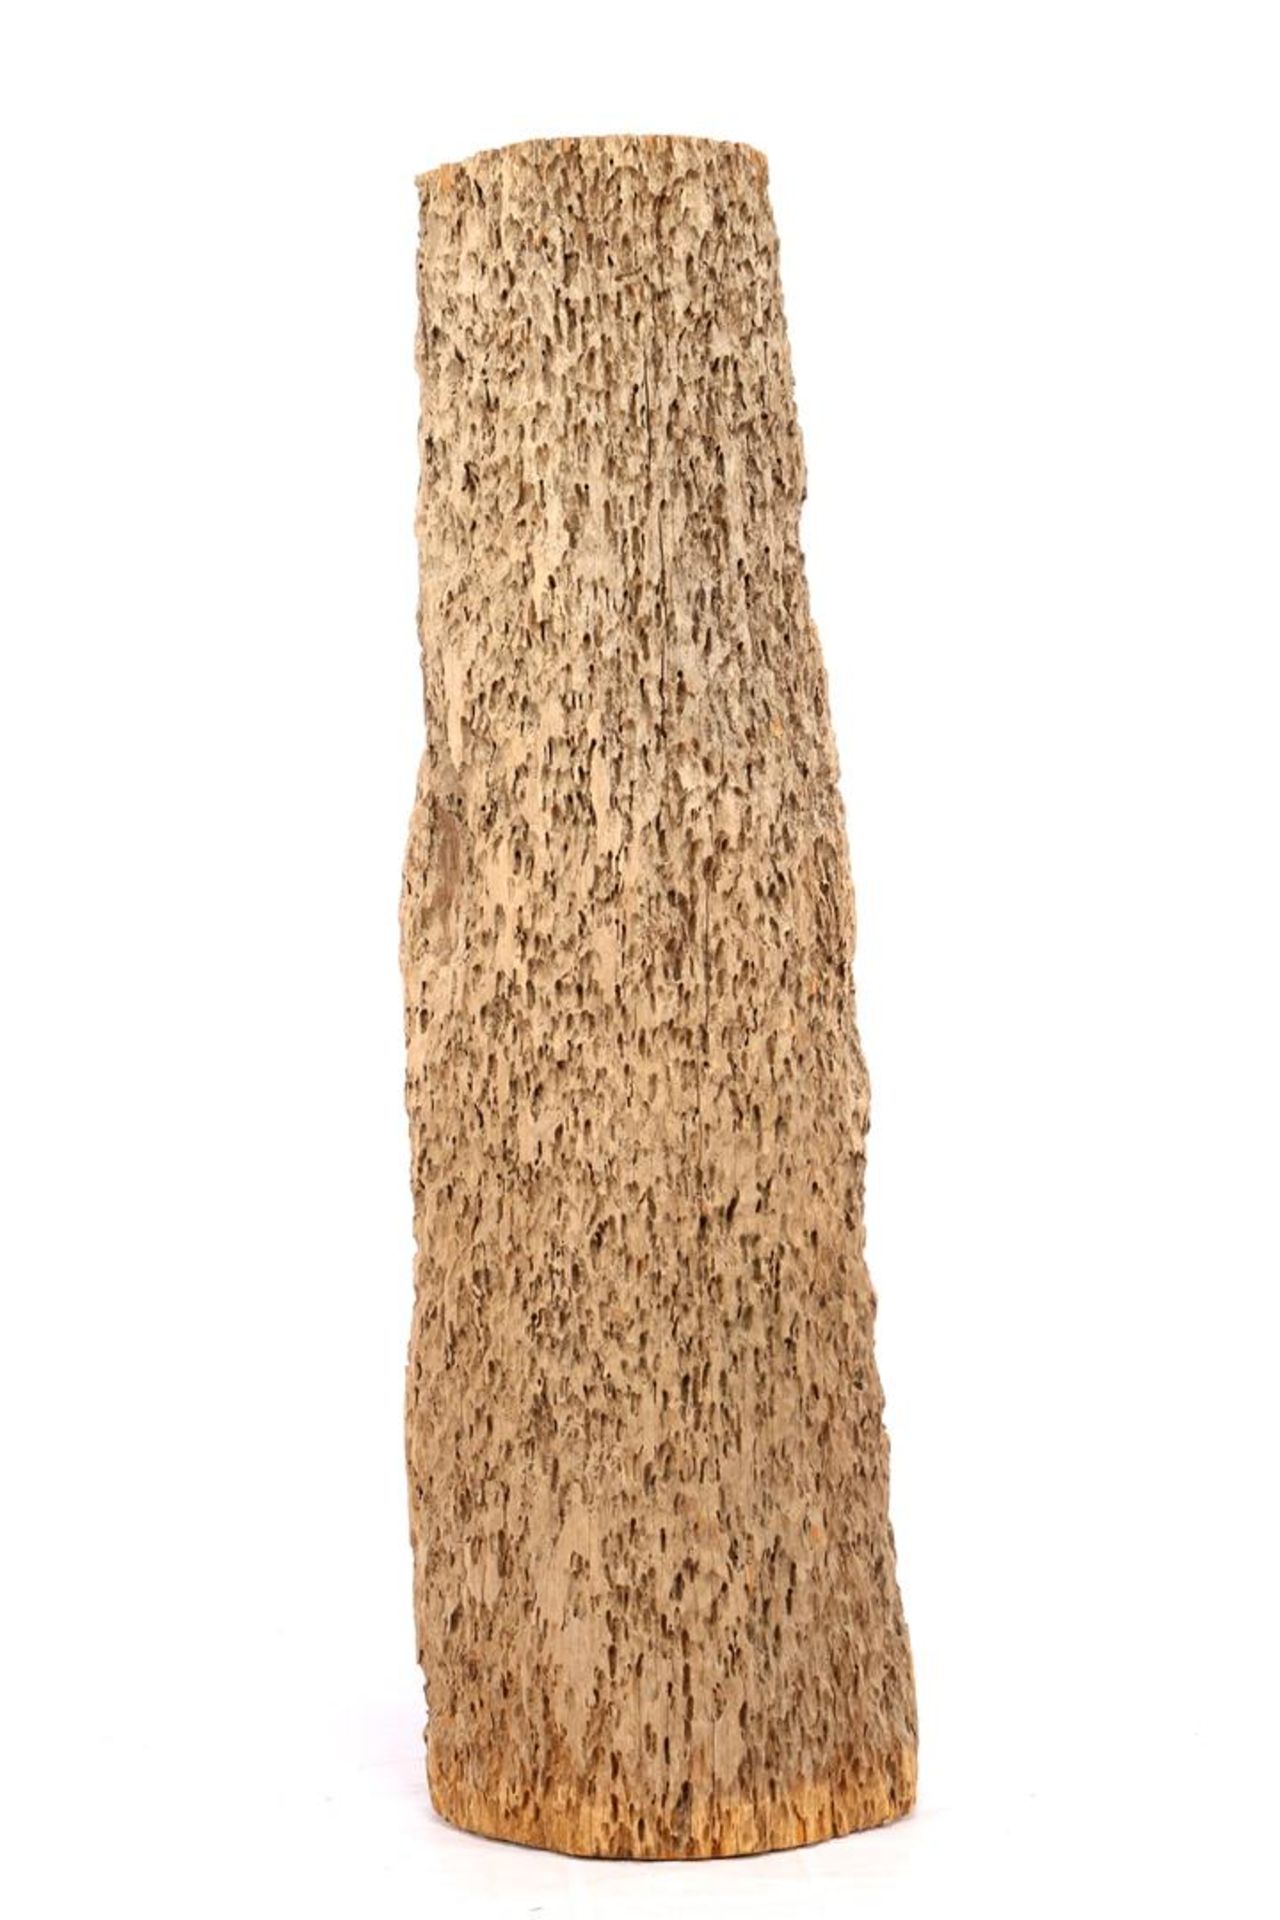 Wooden mussel pole, 152 cm high and 30-40 cm in diameter - Bild 2 aus 2